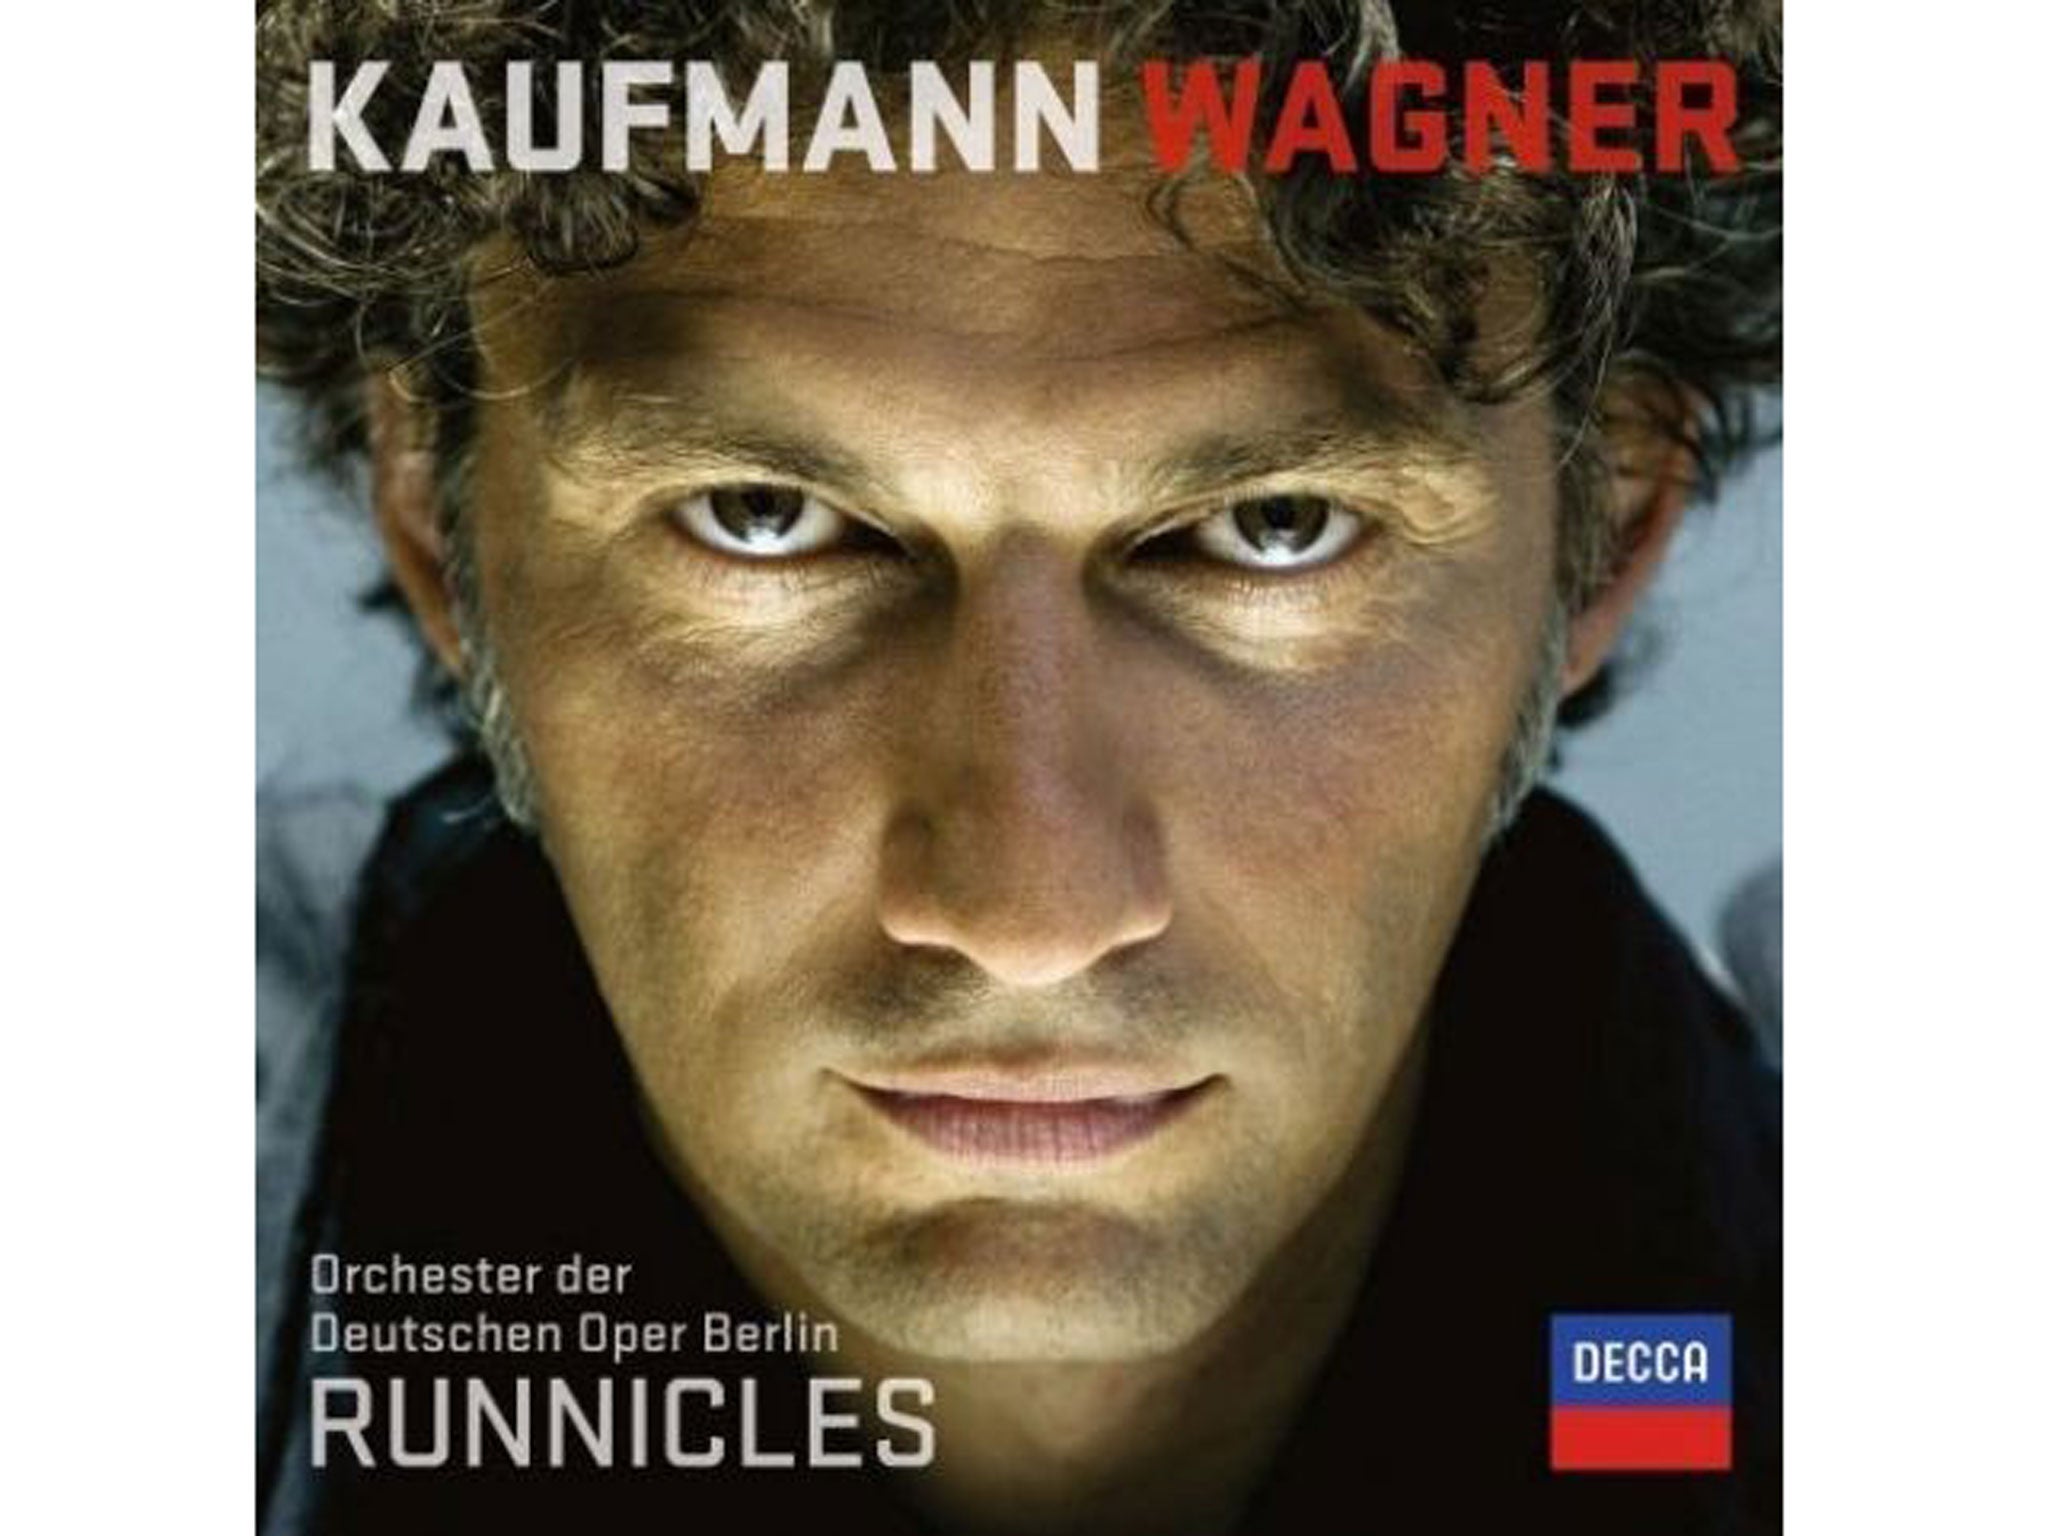 Jonas Kaufmann, Wagner (Decca)